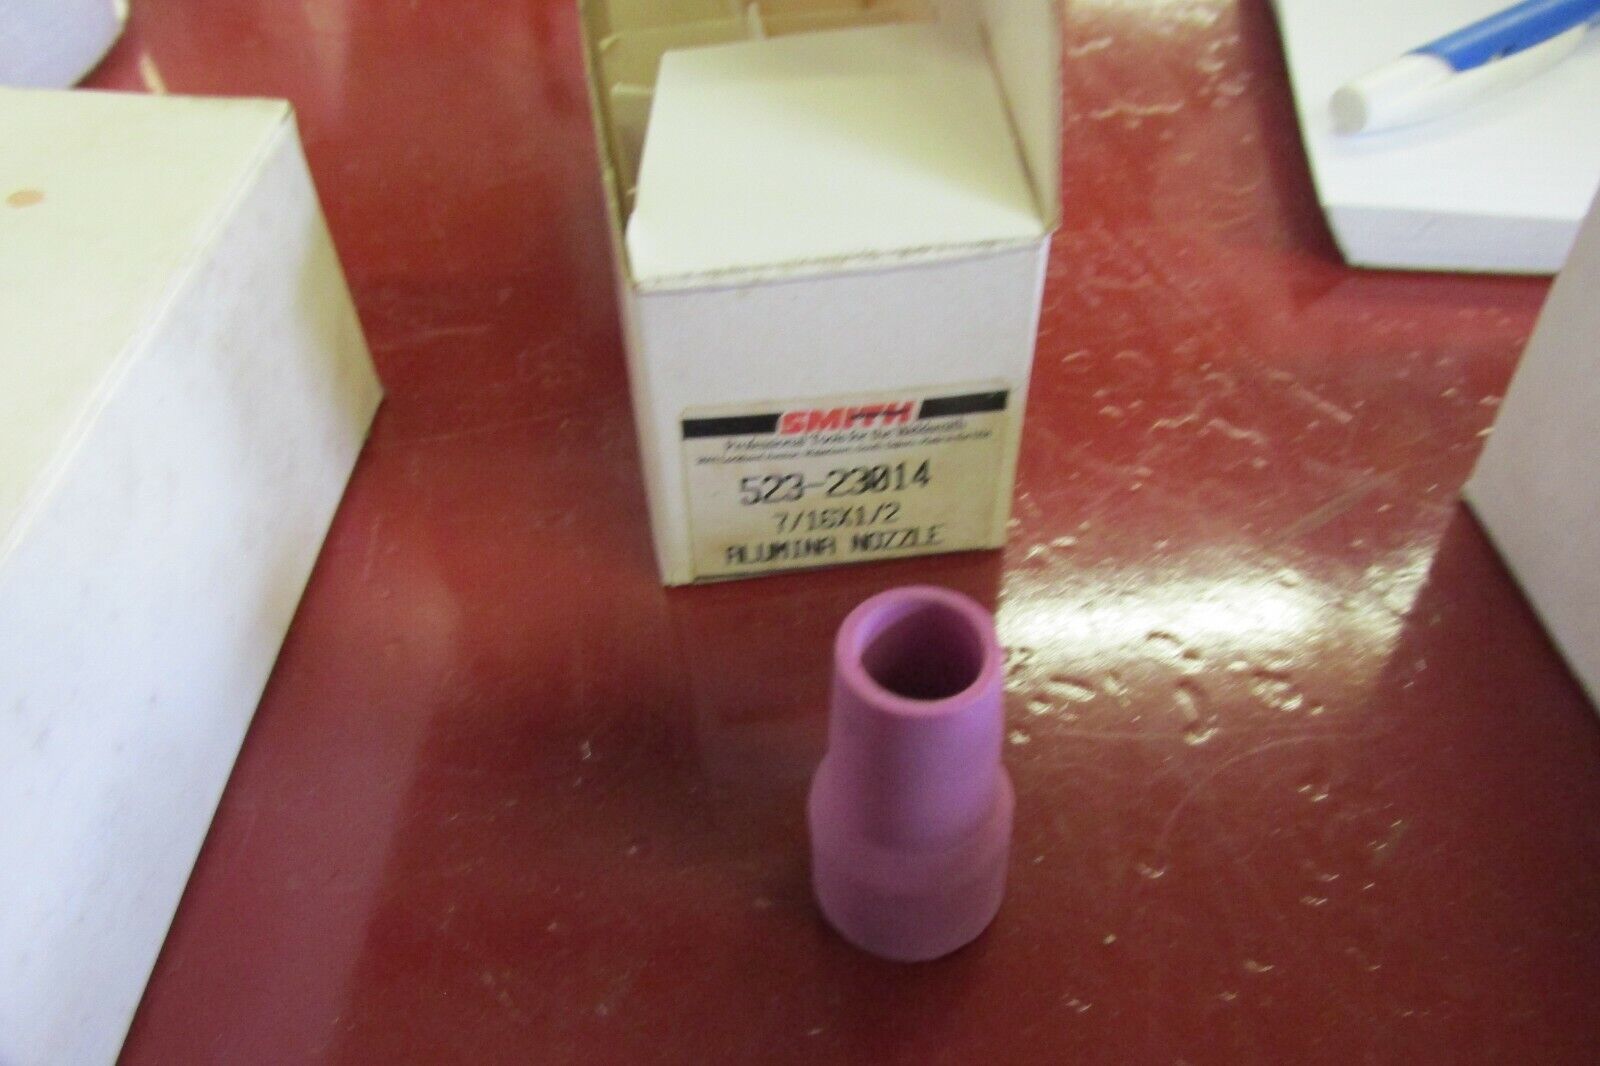 Smith 523-23014 7/16 x 1 1/2 Alumina Nozzle Ceramic Tig Torch Tip 12 per pack Smith Does Not Apply - фотография #4